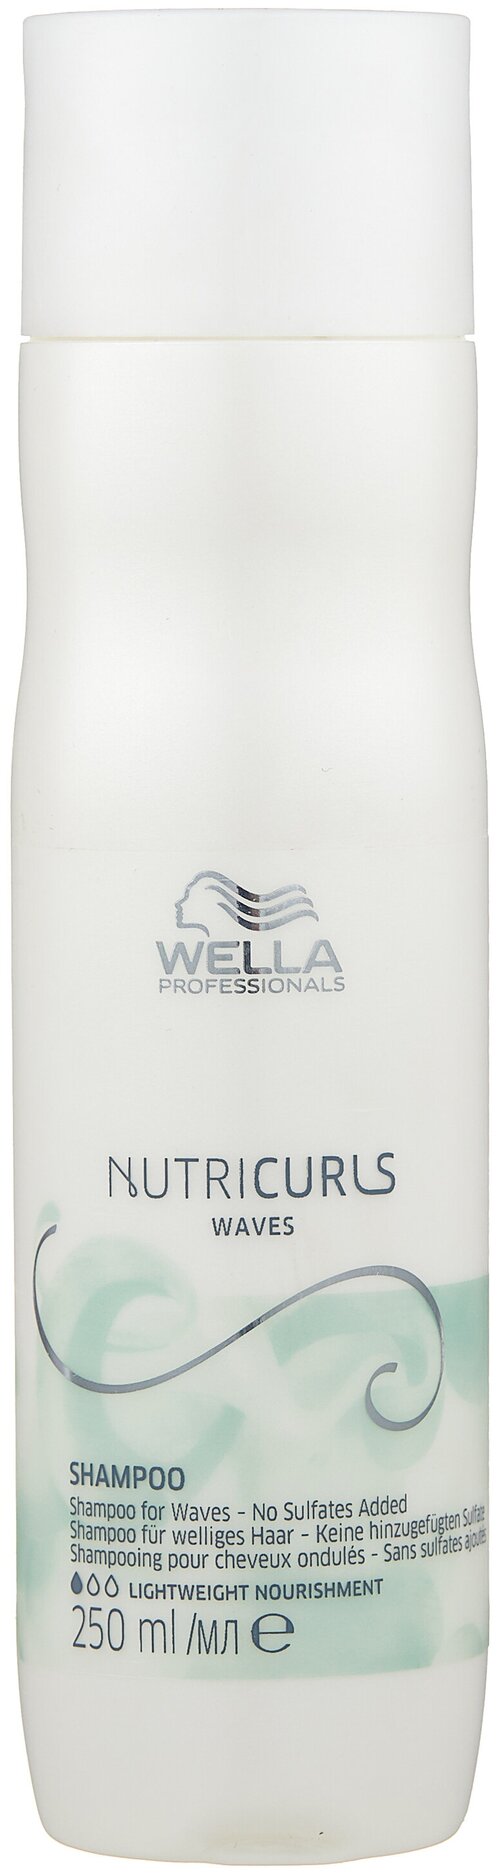 Wella Professionals шампунь Nutricurls Waves, 250 мл